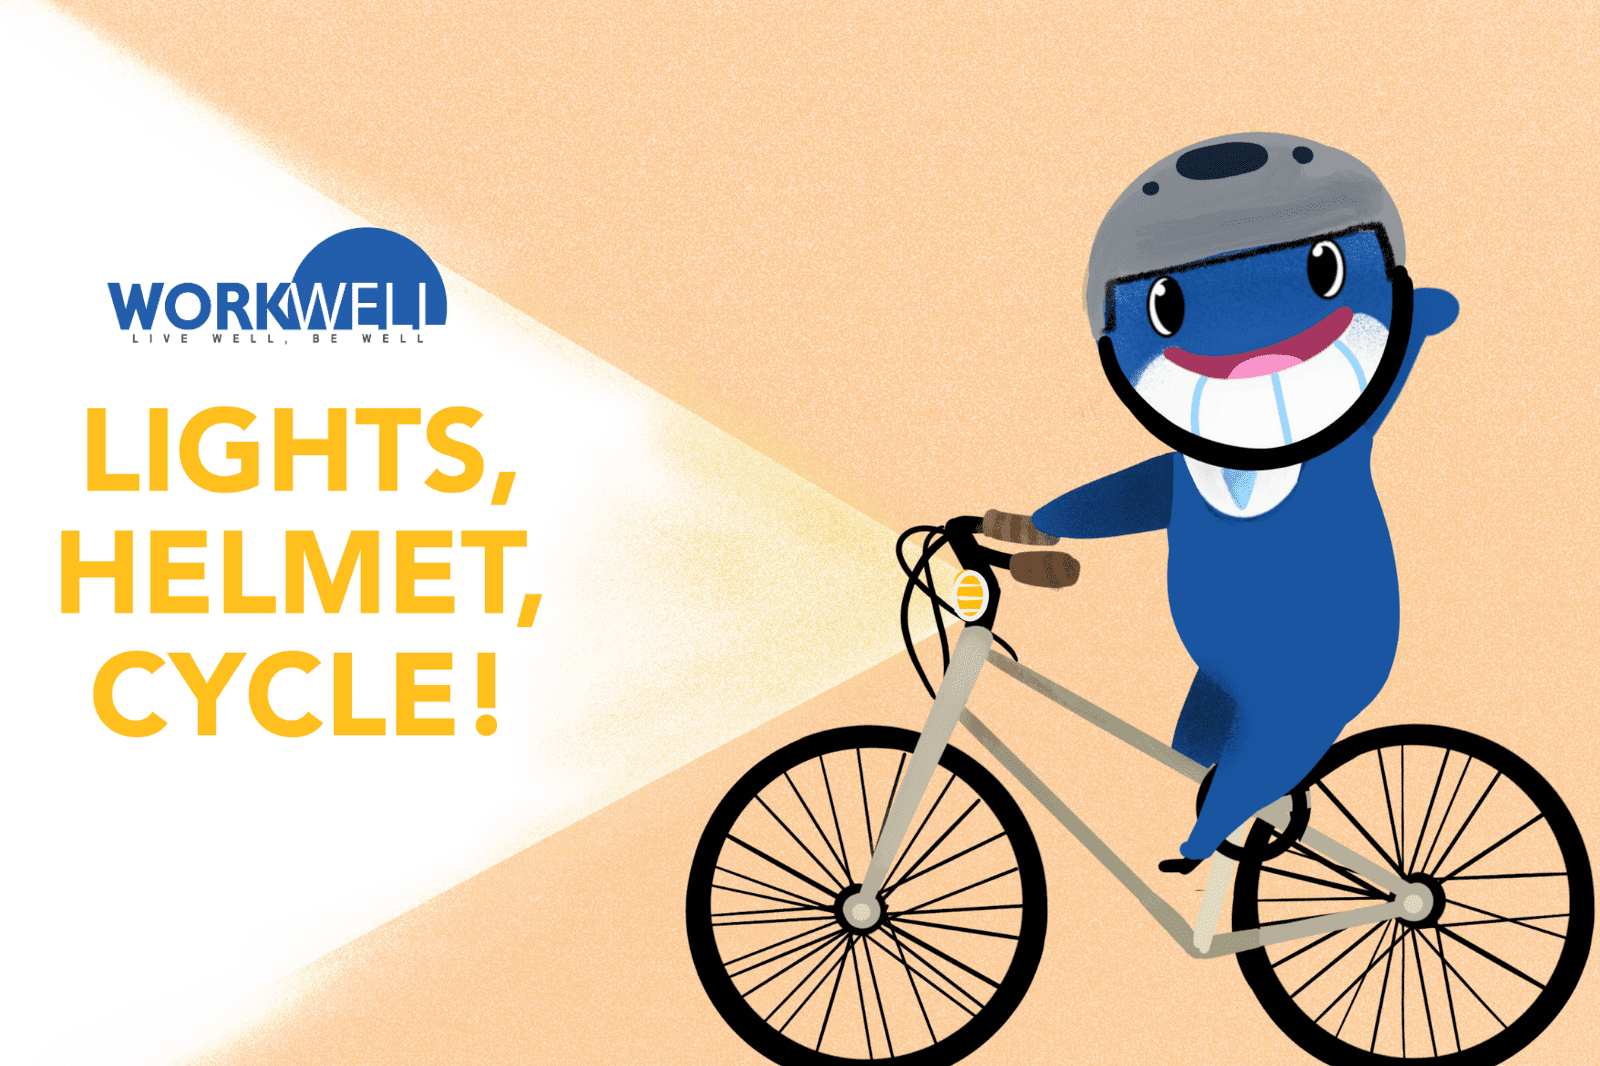 Workwell.SG “Lights, Helmet, Cycle!” Webinar 26 Oct 2020